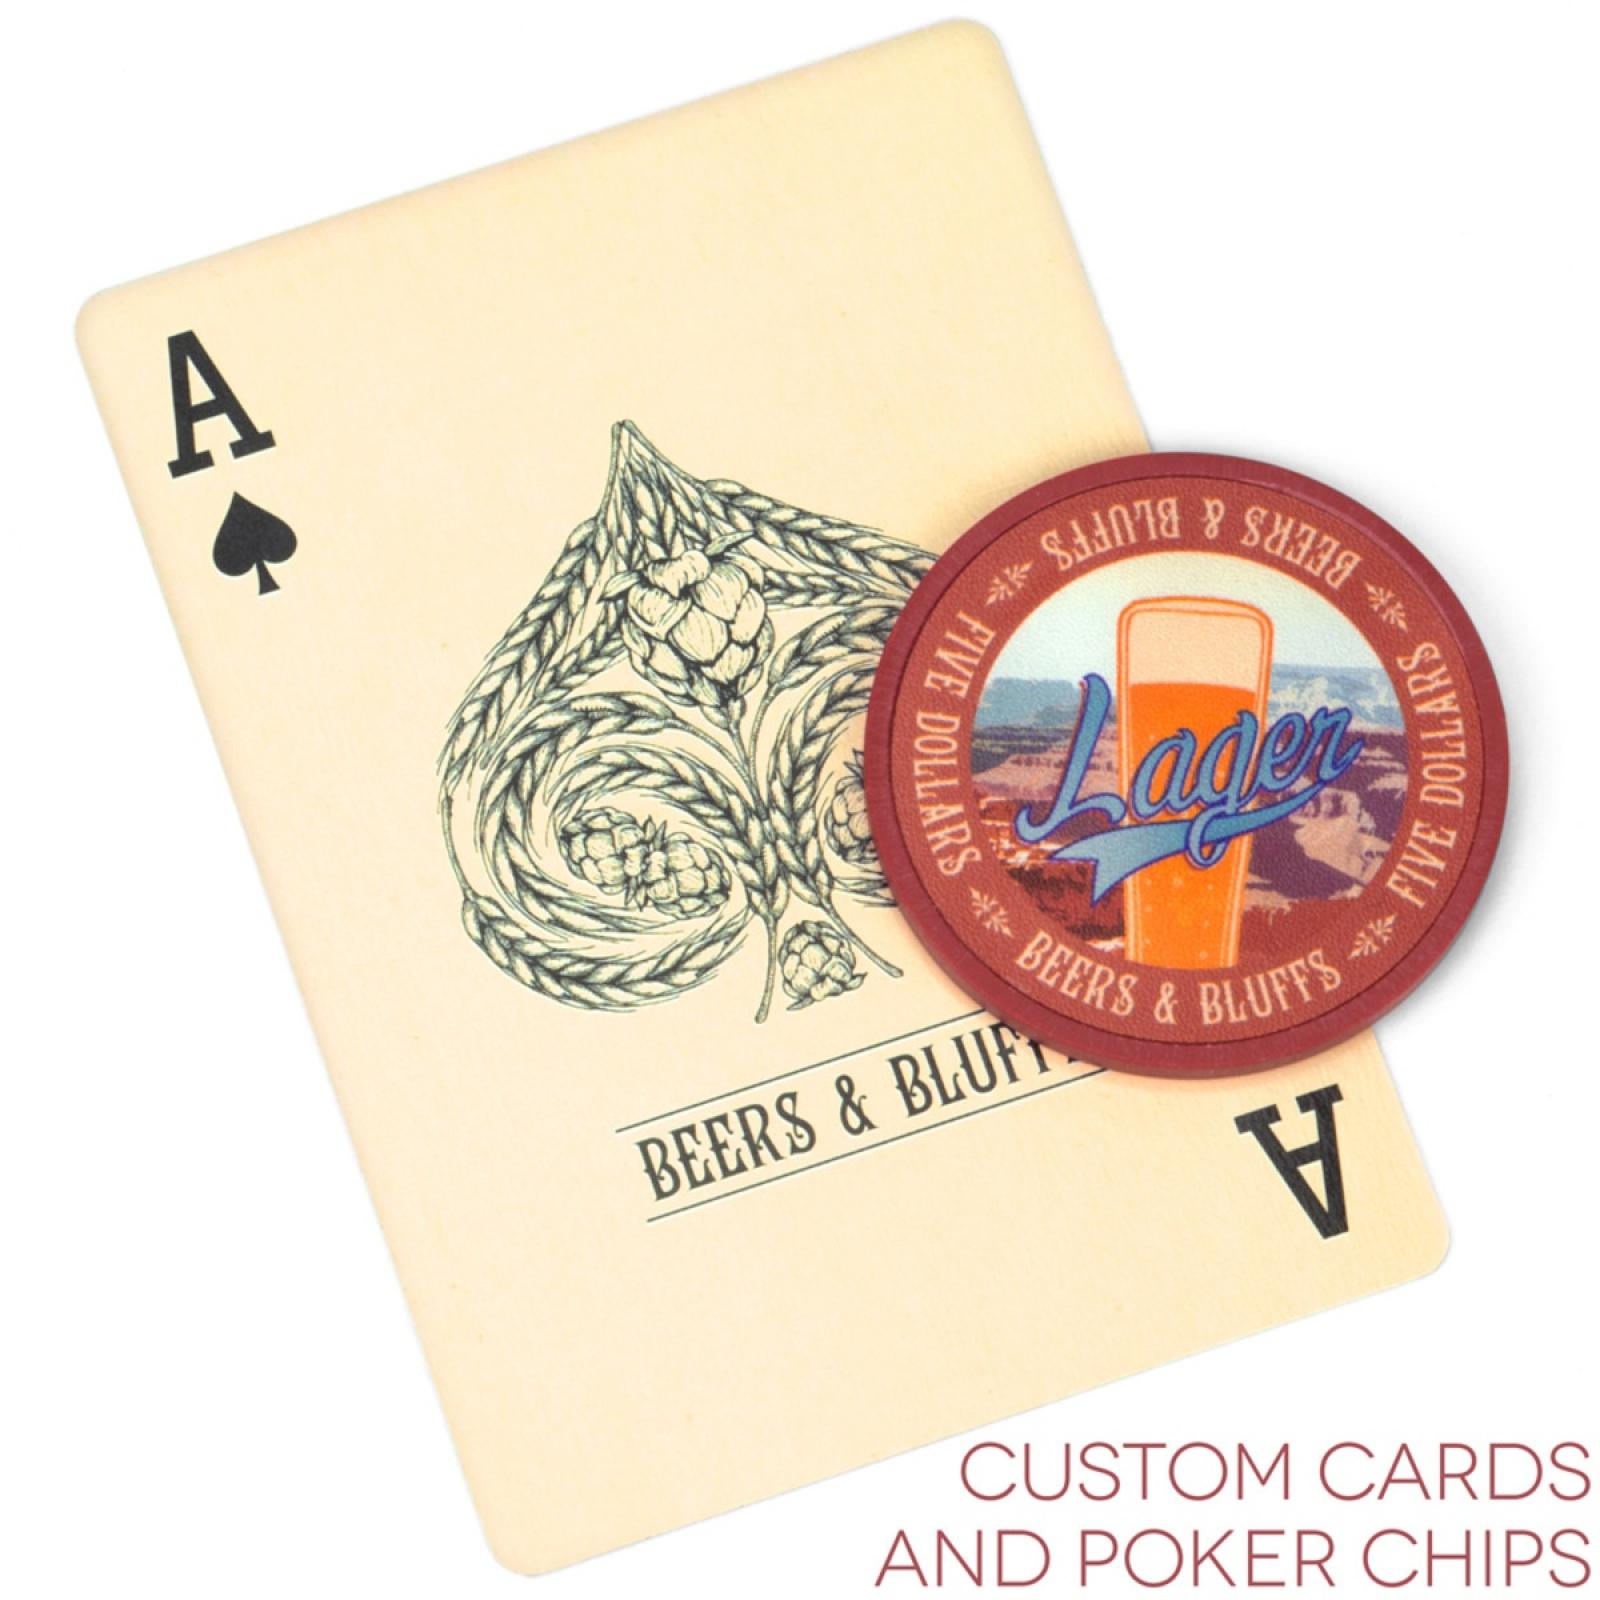 Beers & Bluffs Poker Chip Set Card